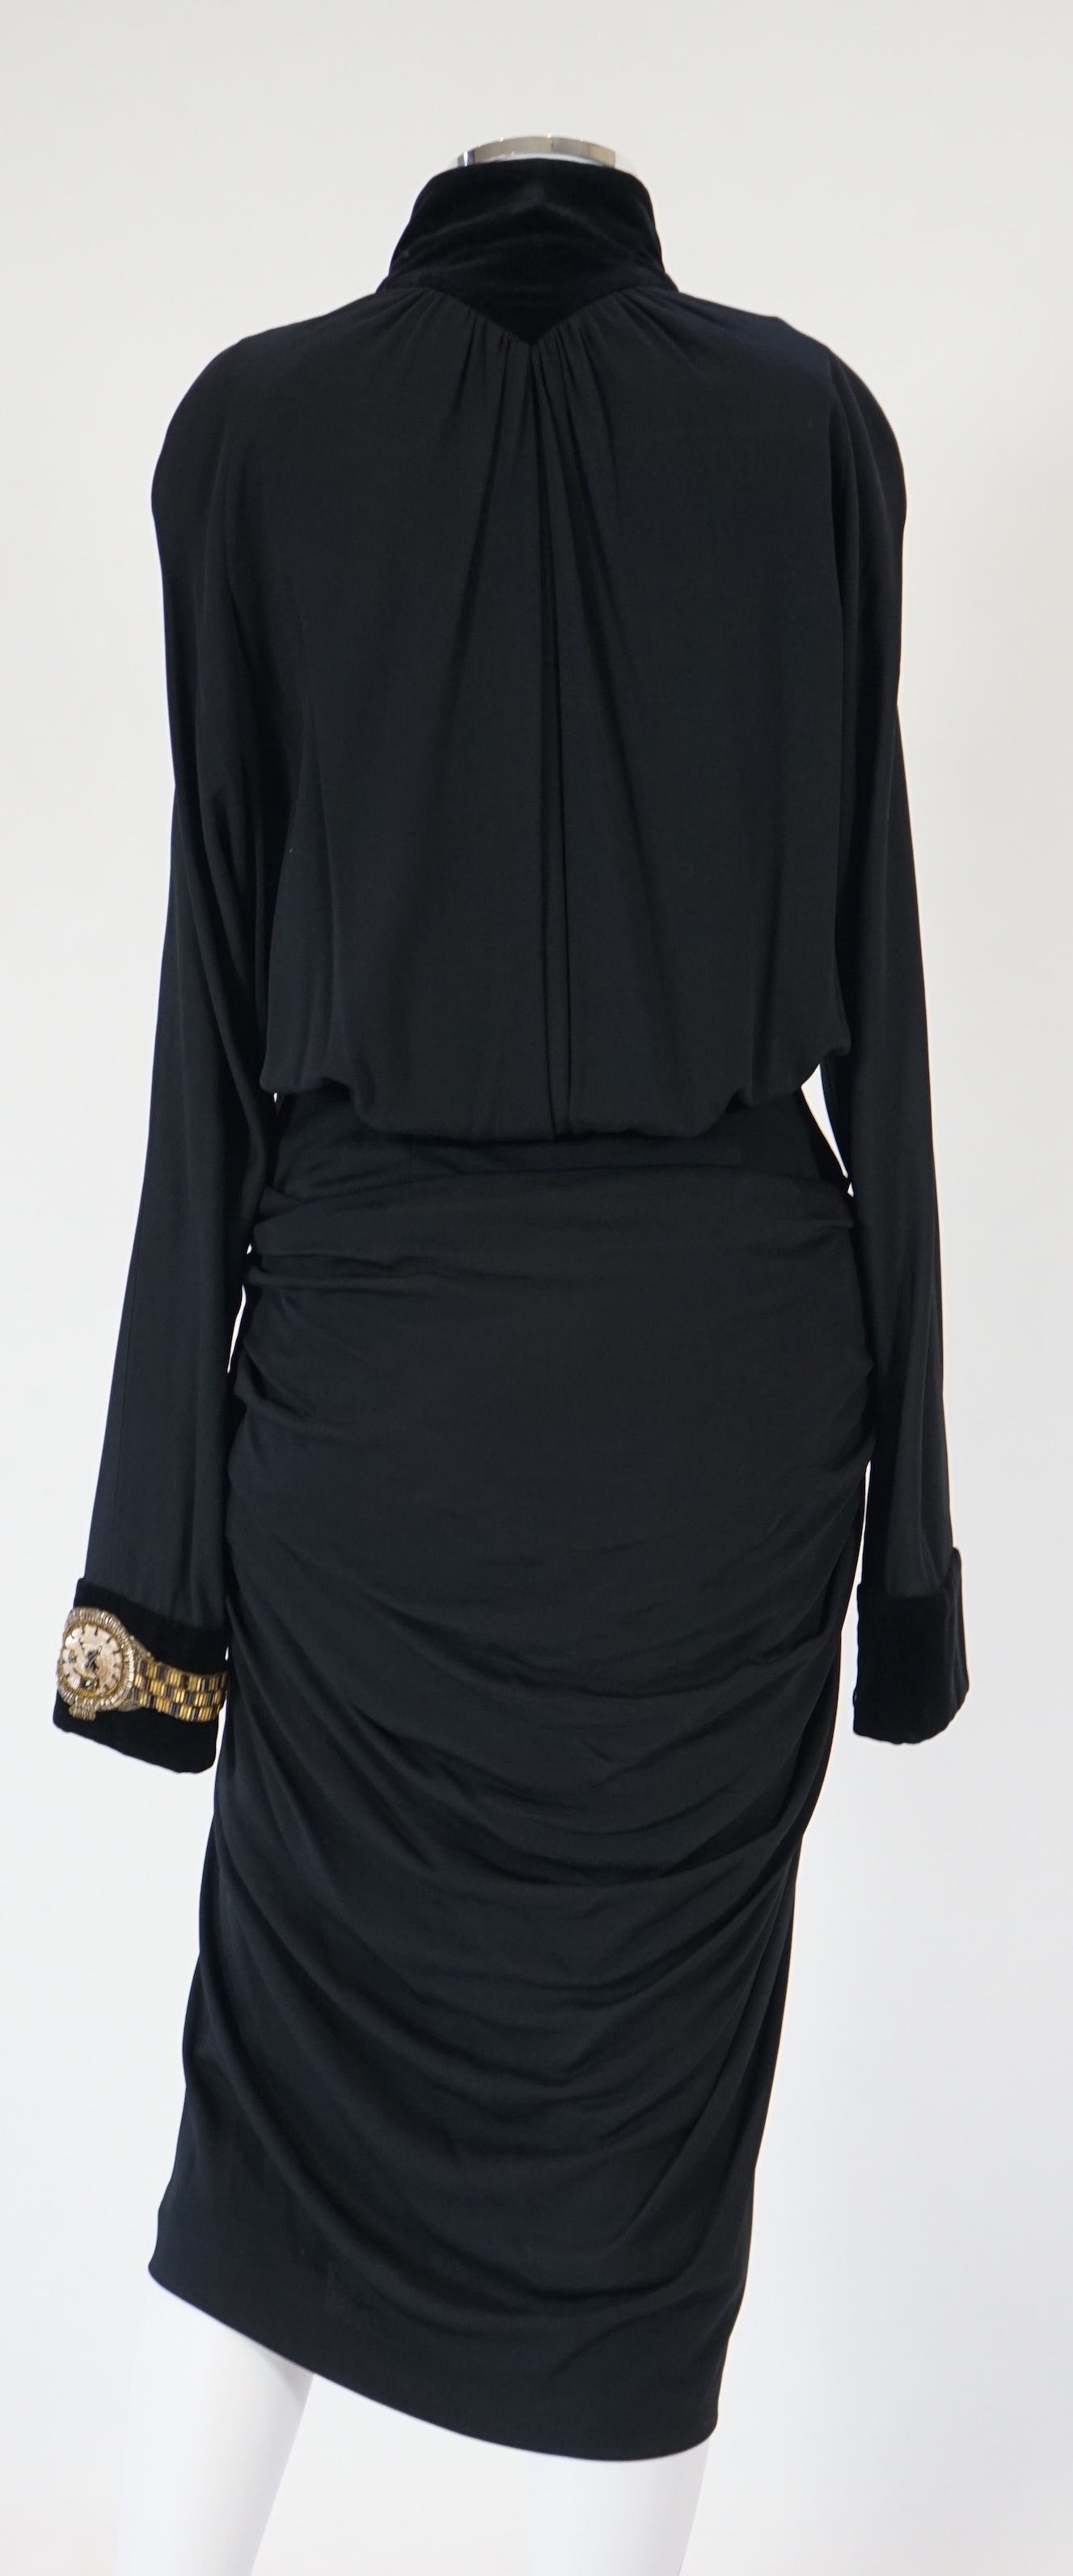 A Karl Lagerfeld black evening dress, stunning dress, velvet collar and velvet cuffs with gold - Image 9 of 11